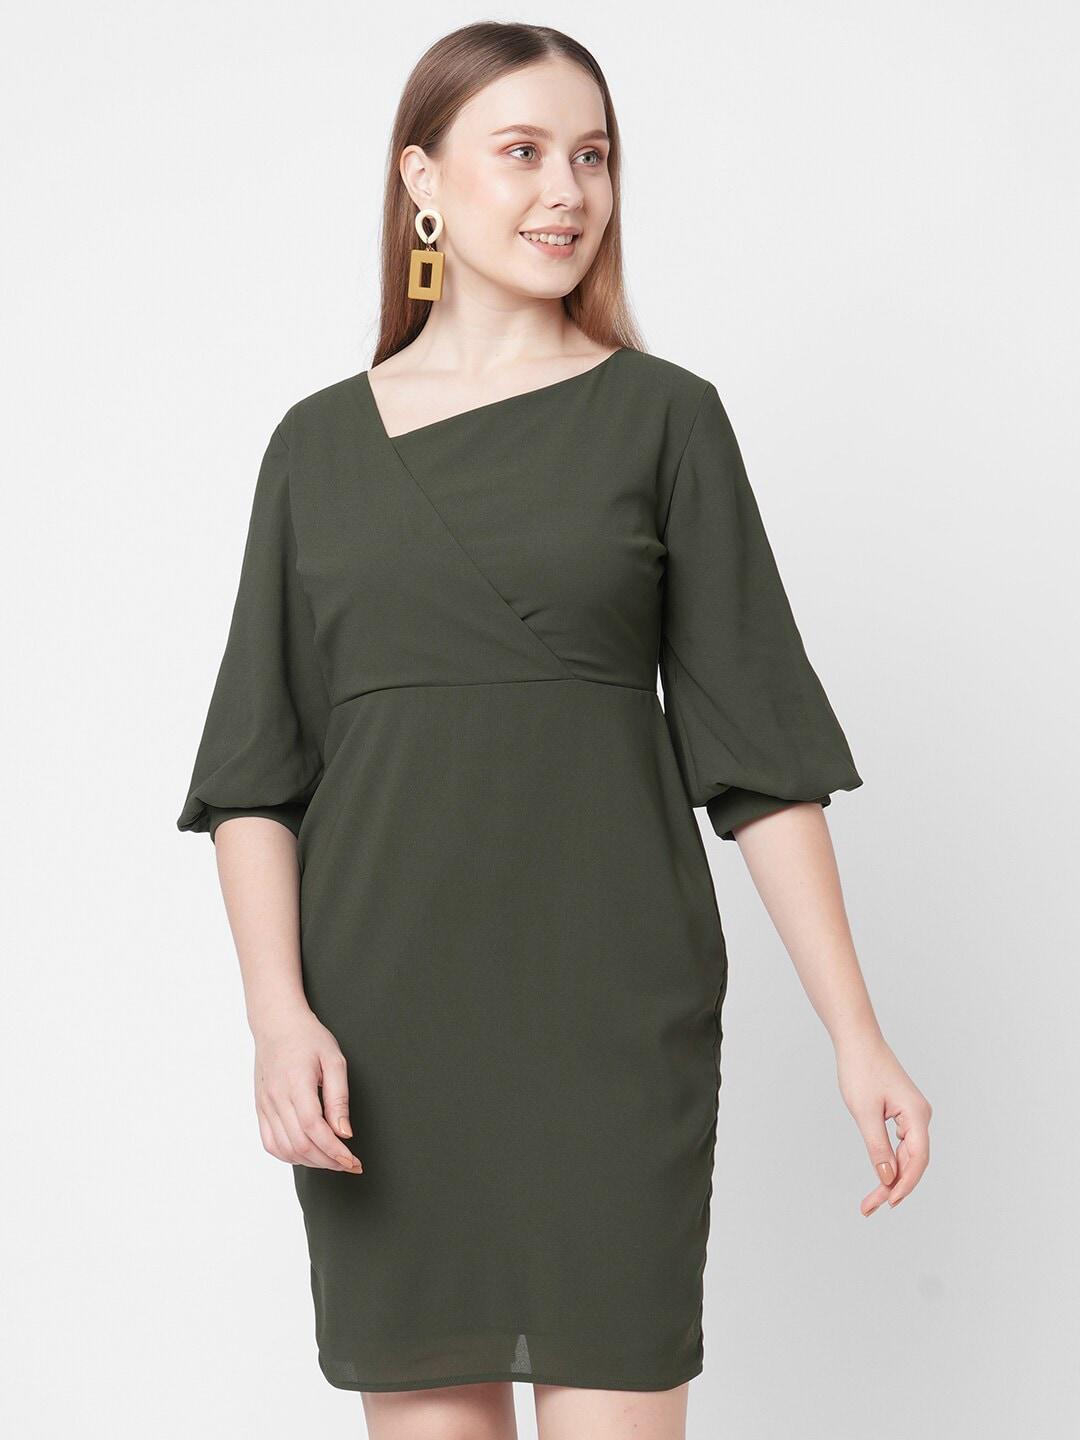 mish-women-olive-green-georgette-sheath-dress